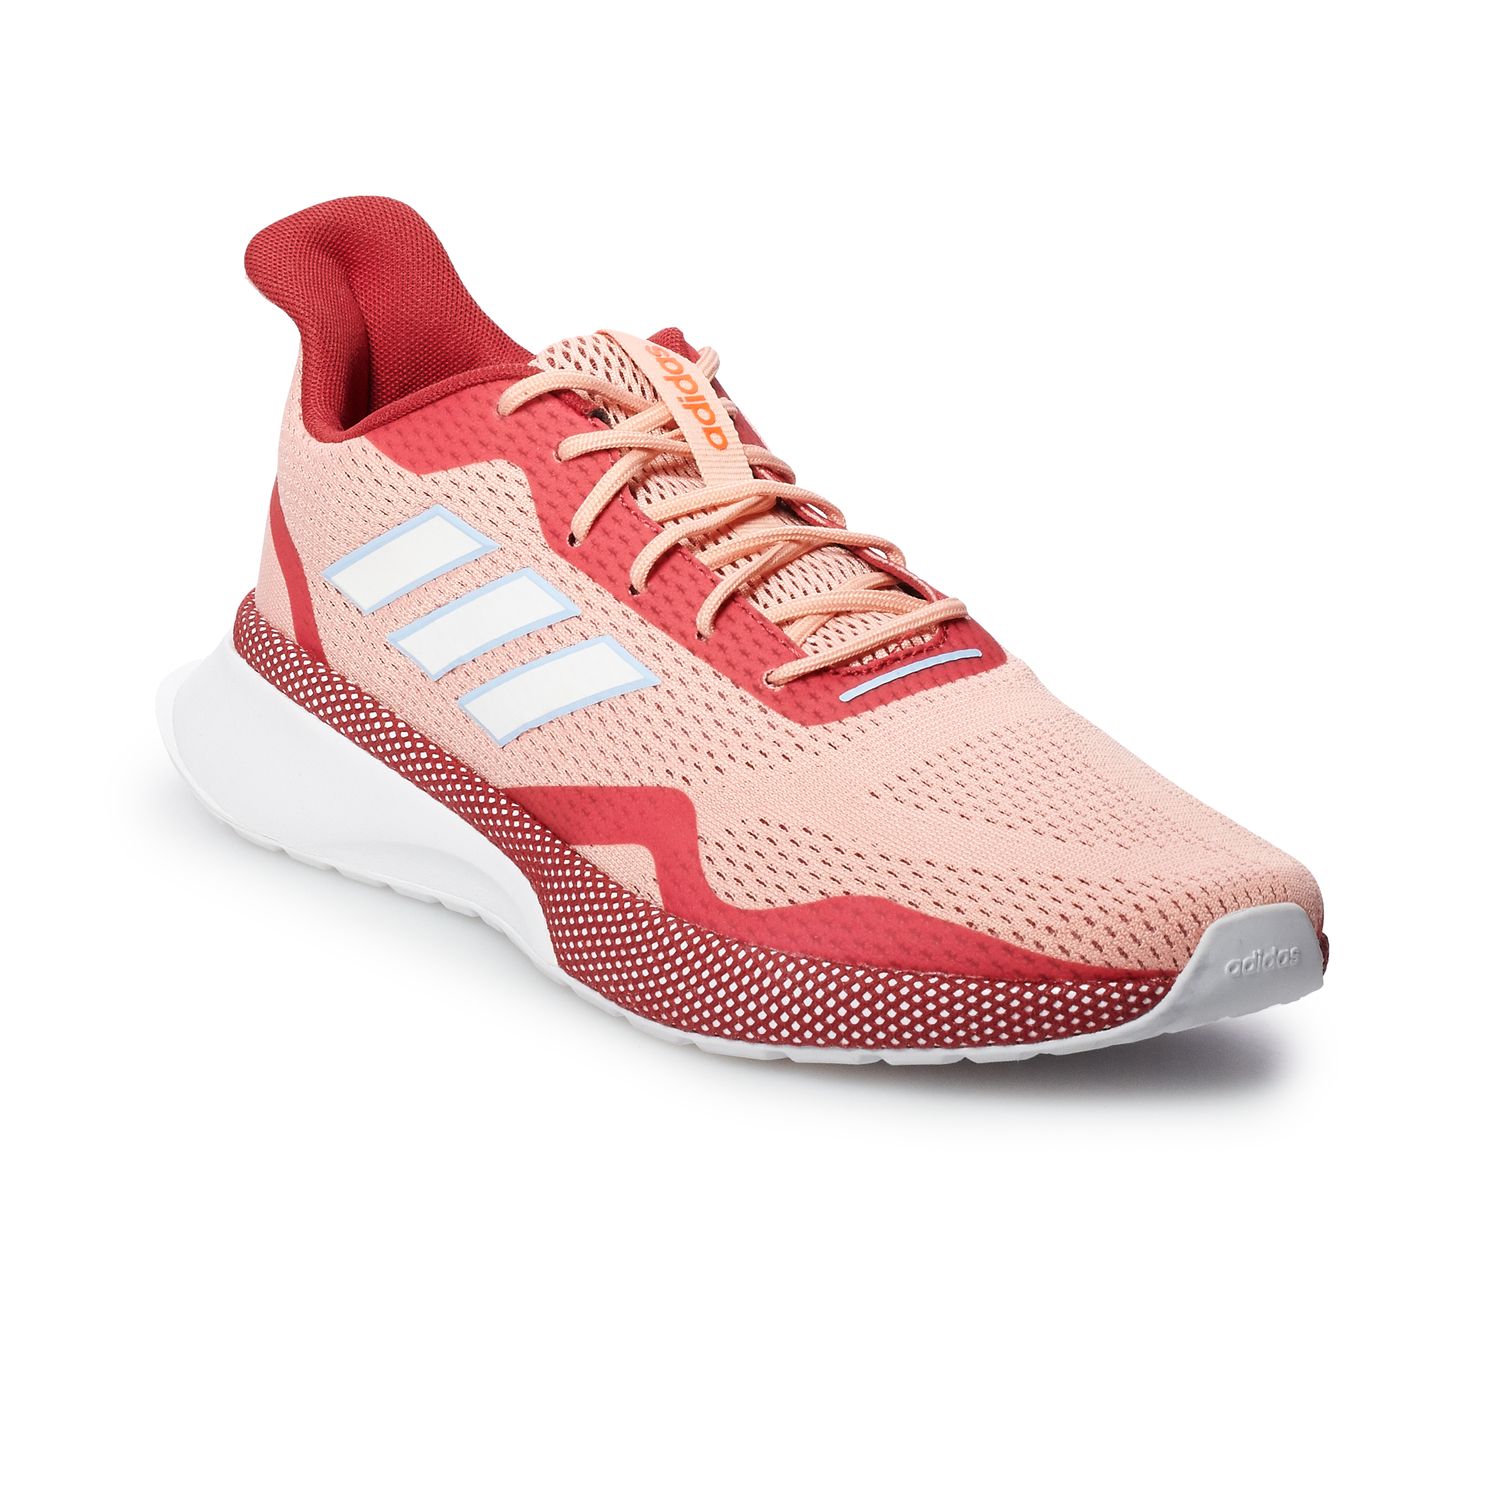 adidas women's nova x running shoe